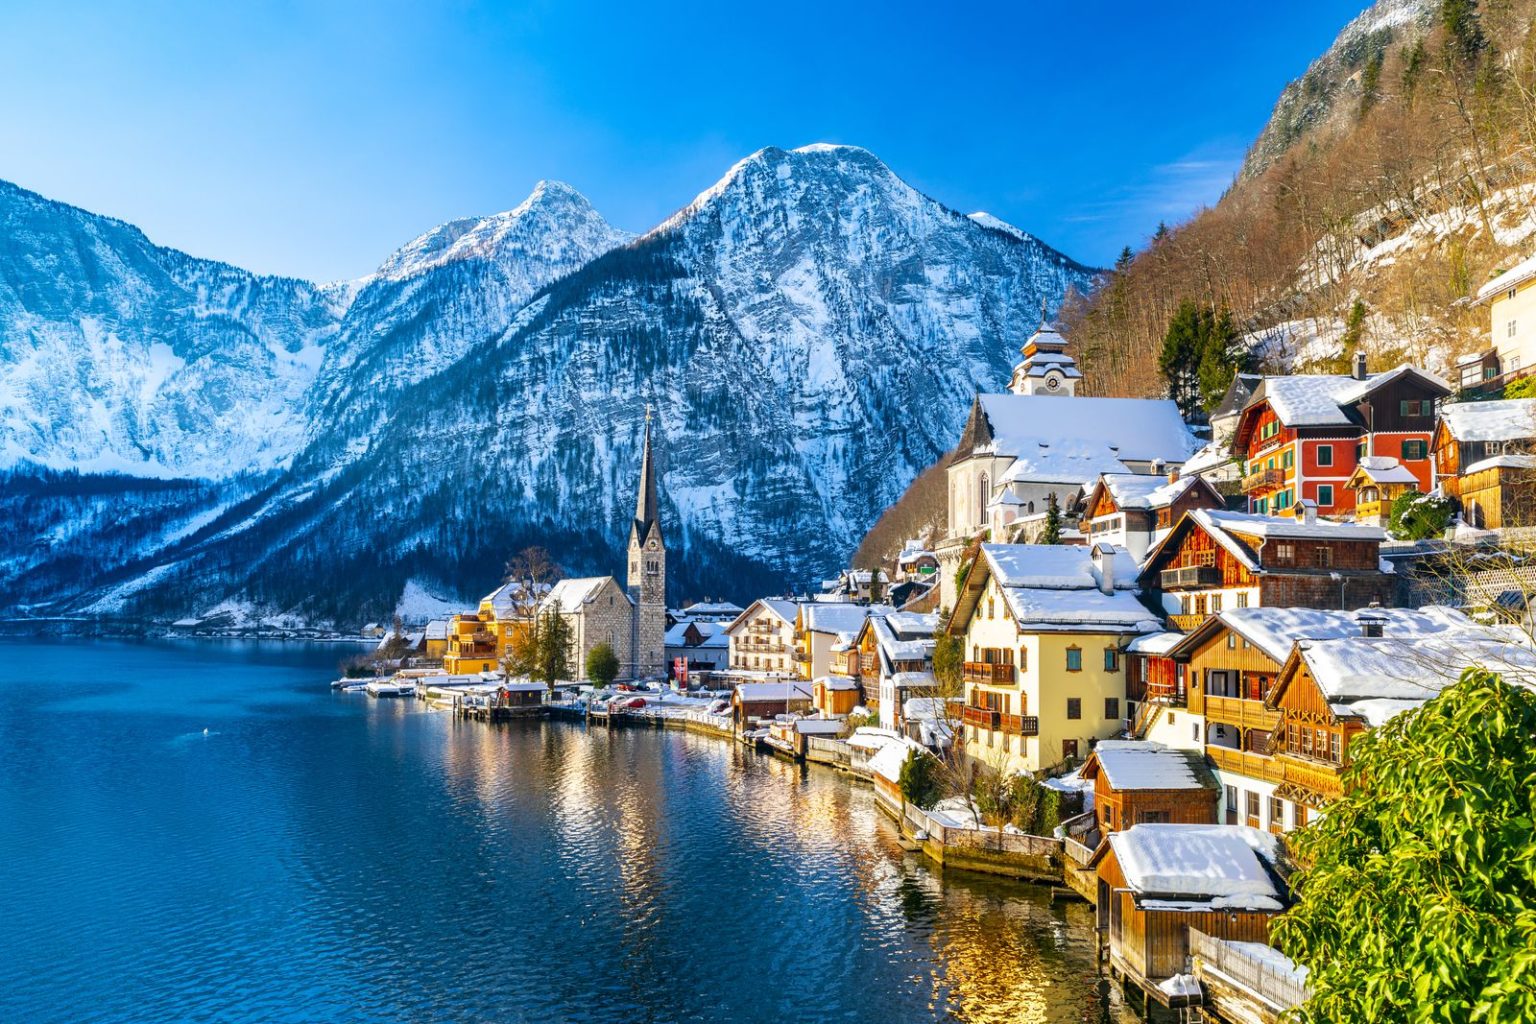 popular tourist attraction in austria